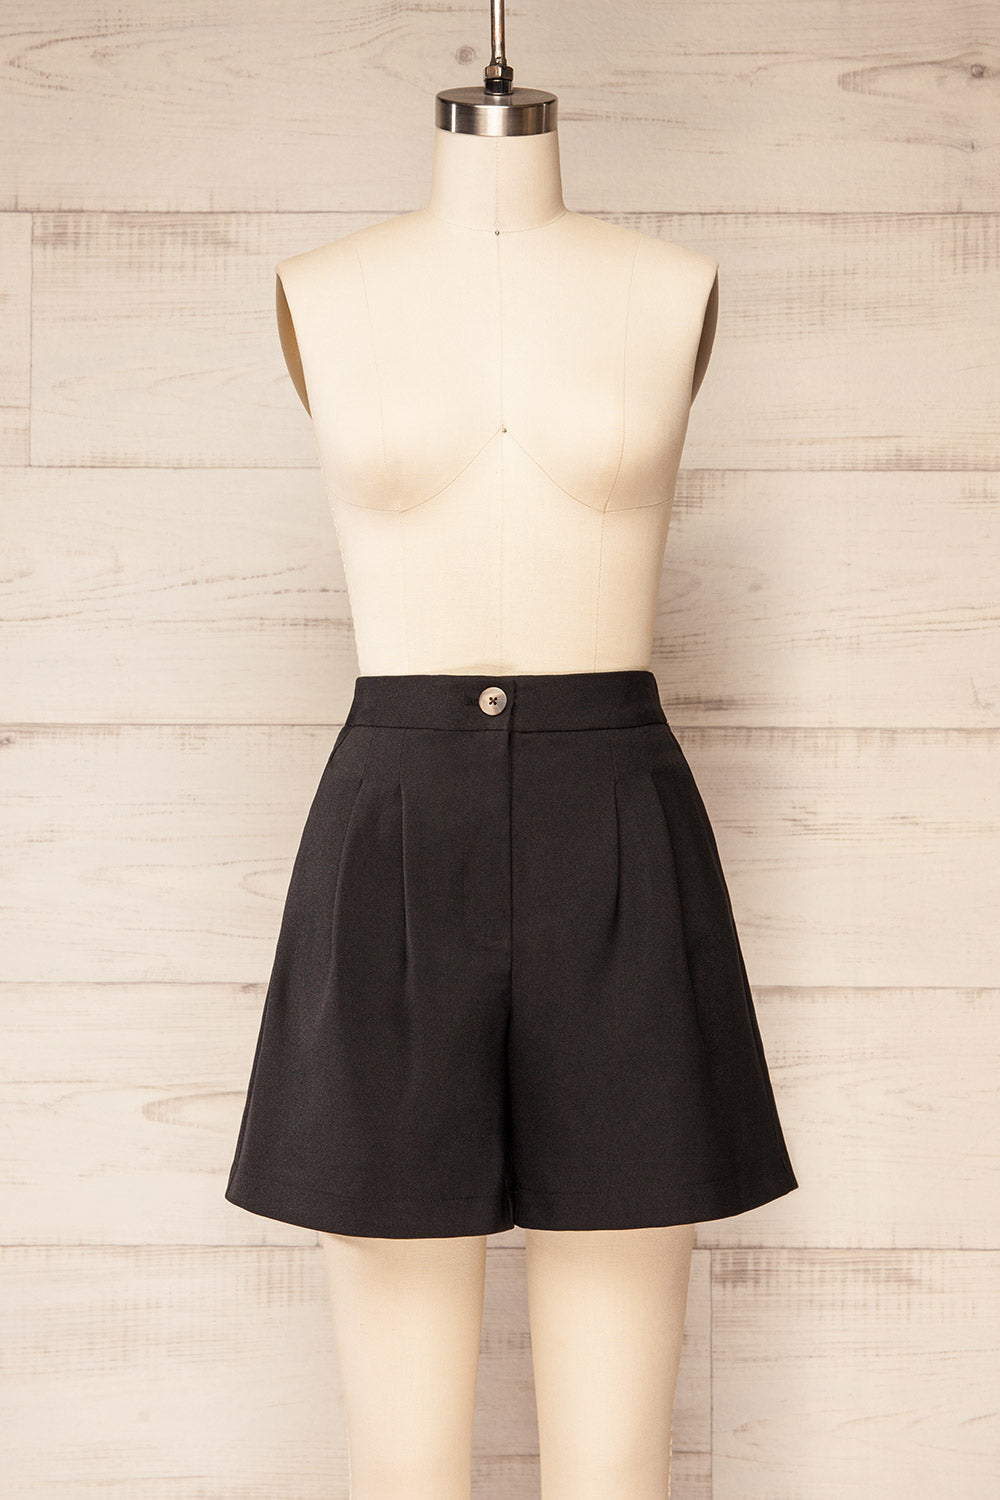 Maddox Black Shorts with Pleats | La petite garçonne front view